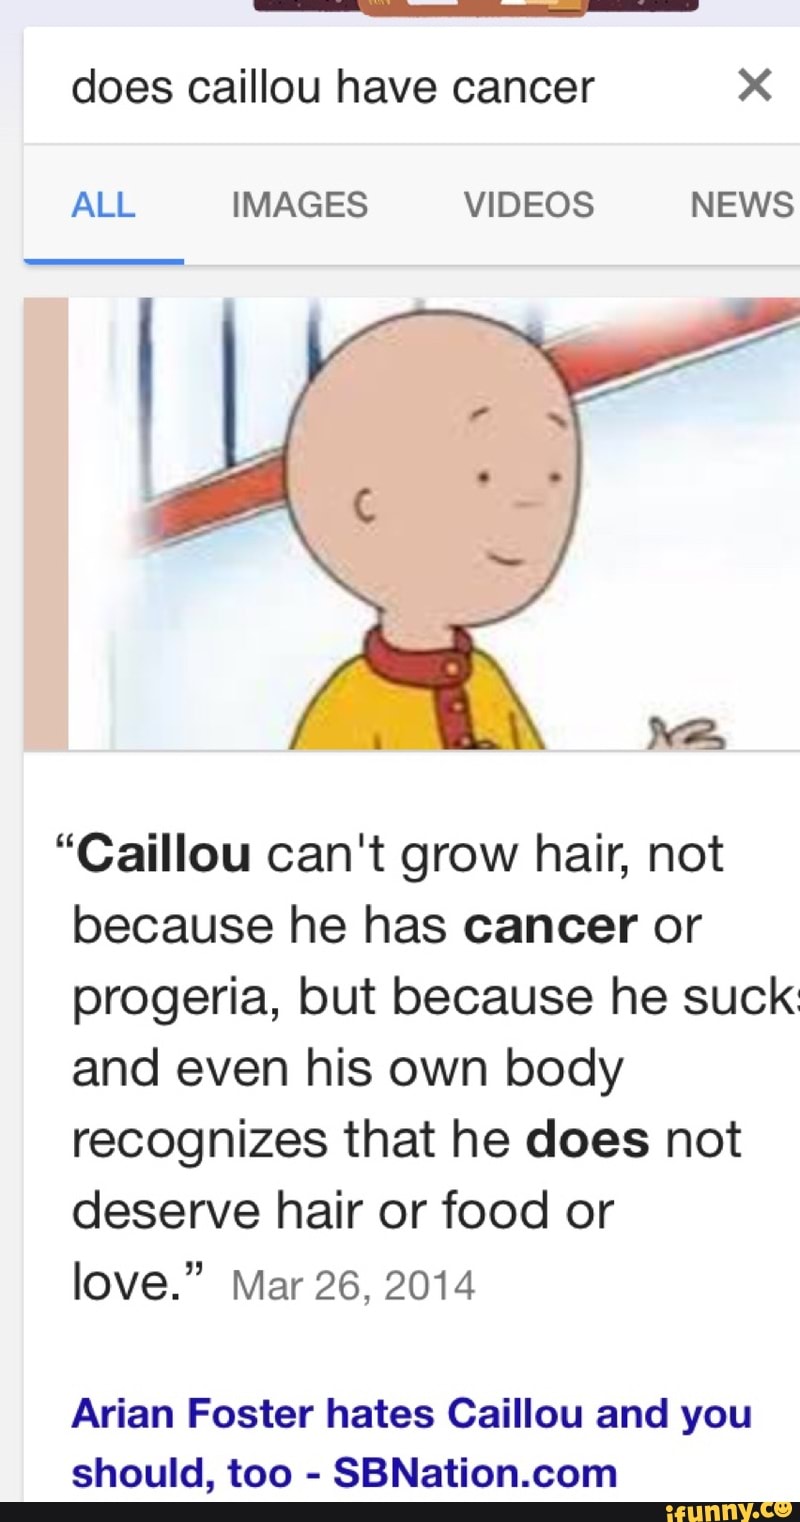 Will caillou ever grow hair